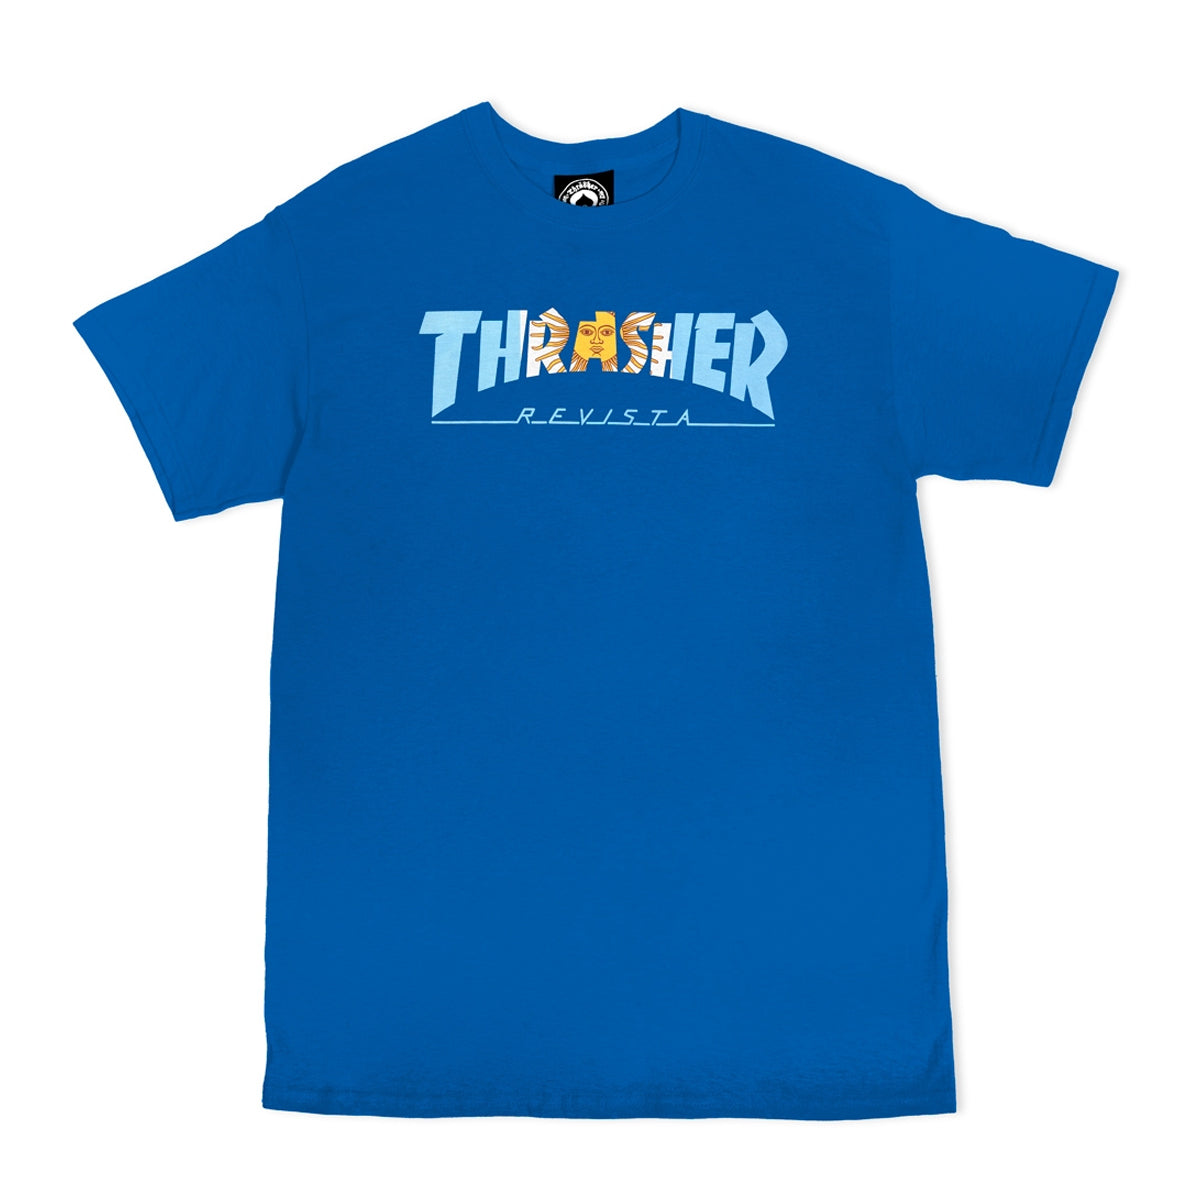 Thrasher Argentina Revista Short Sleeve T-Shirt (Royal Blue) - Apple Valley Emporium